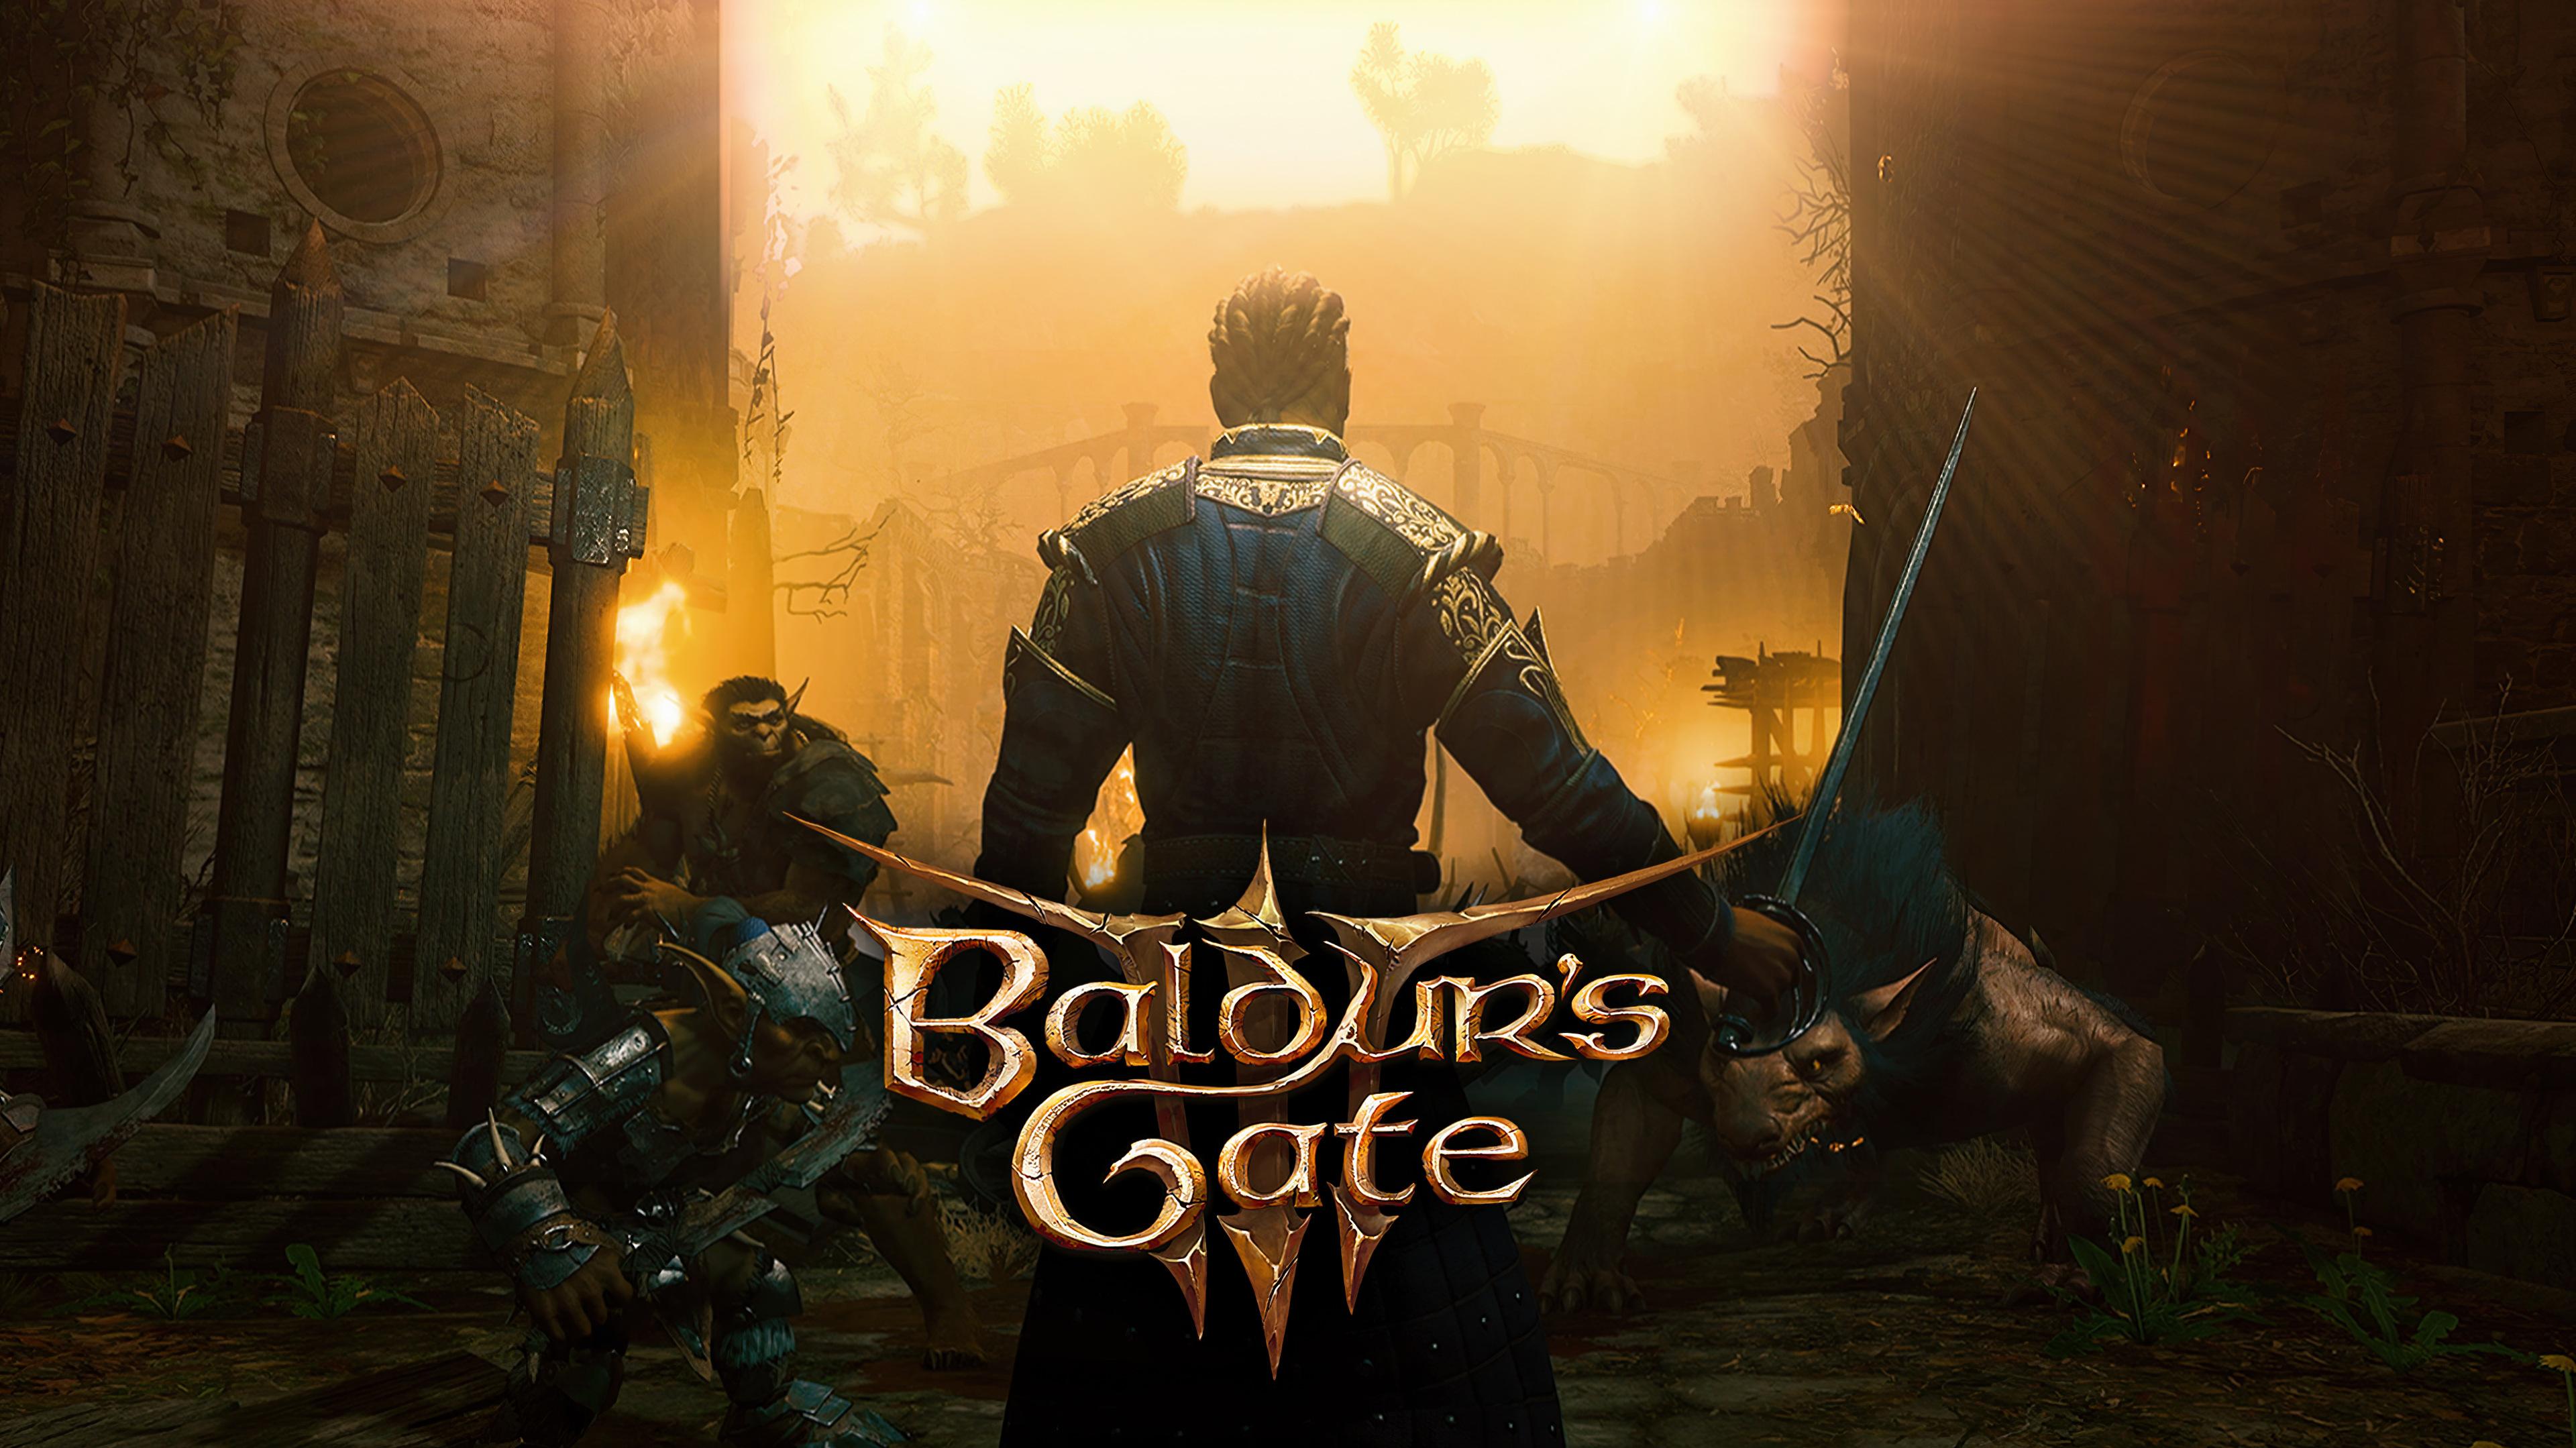 Baldurs Gate Game 4k Wallpaper